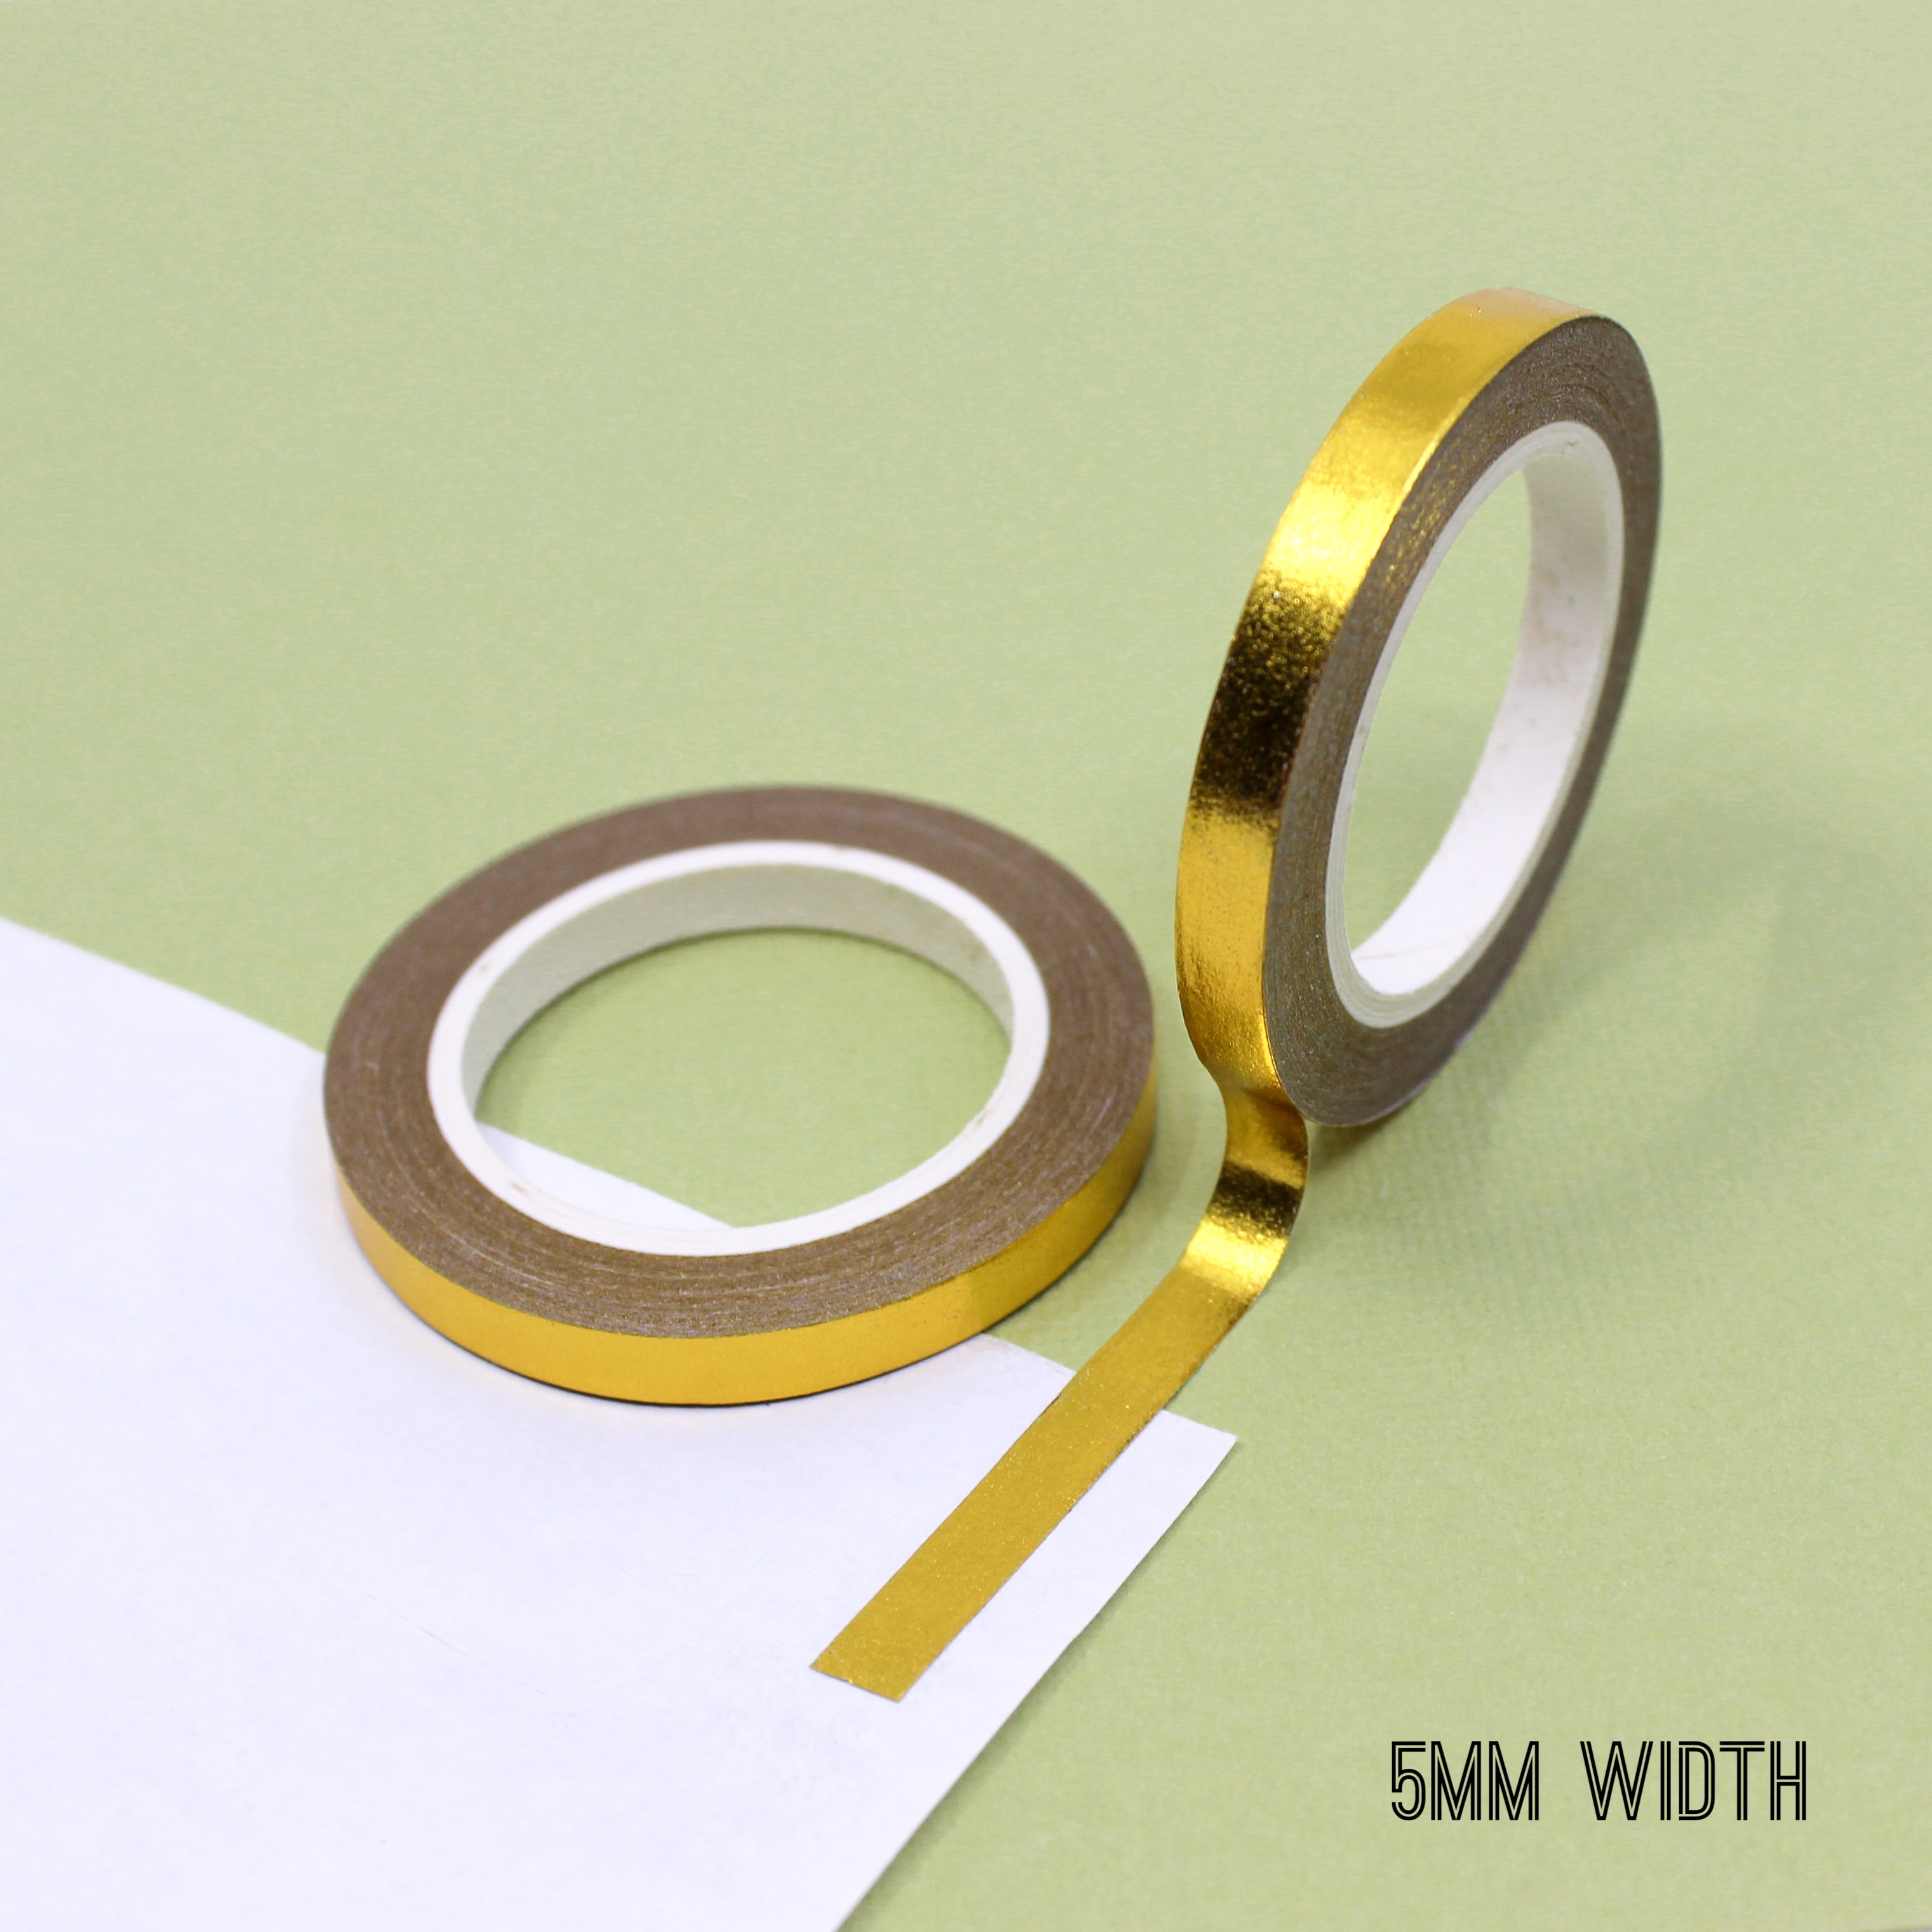 Solid Gold Foil Washi Tape